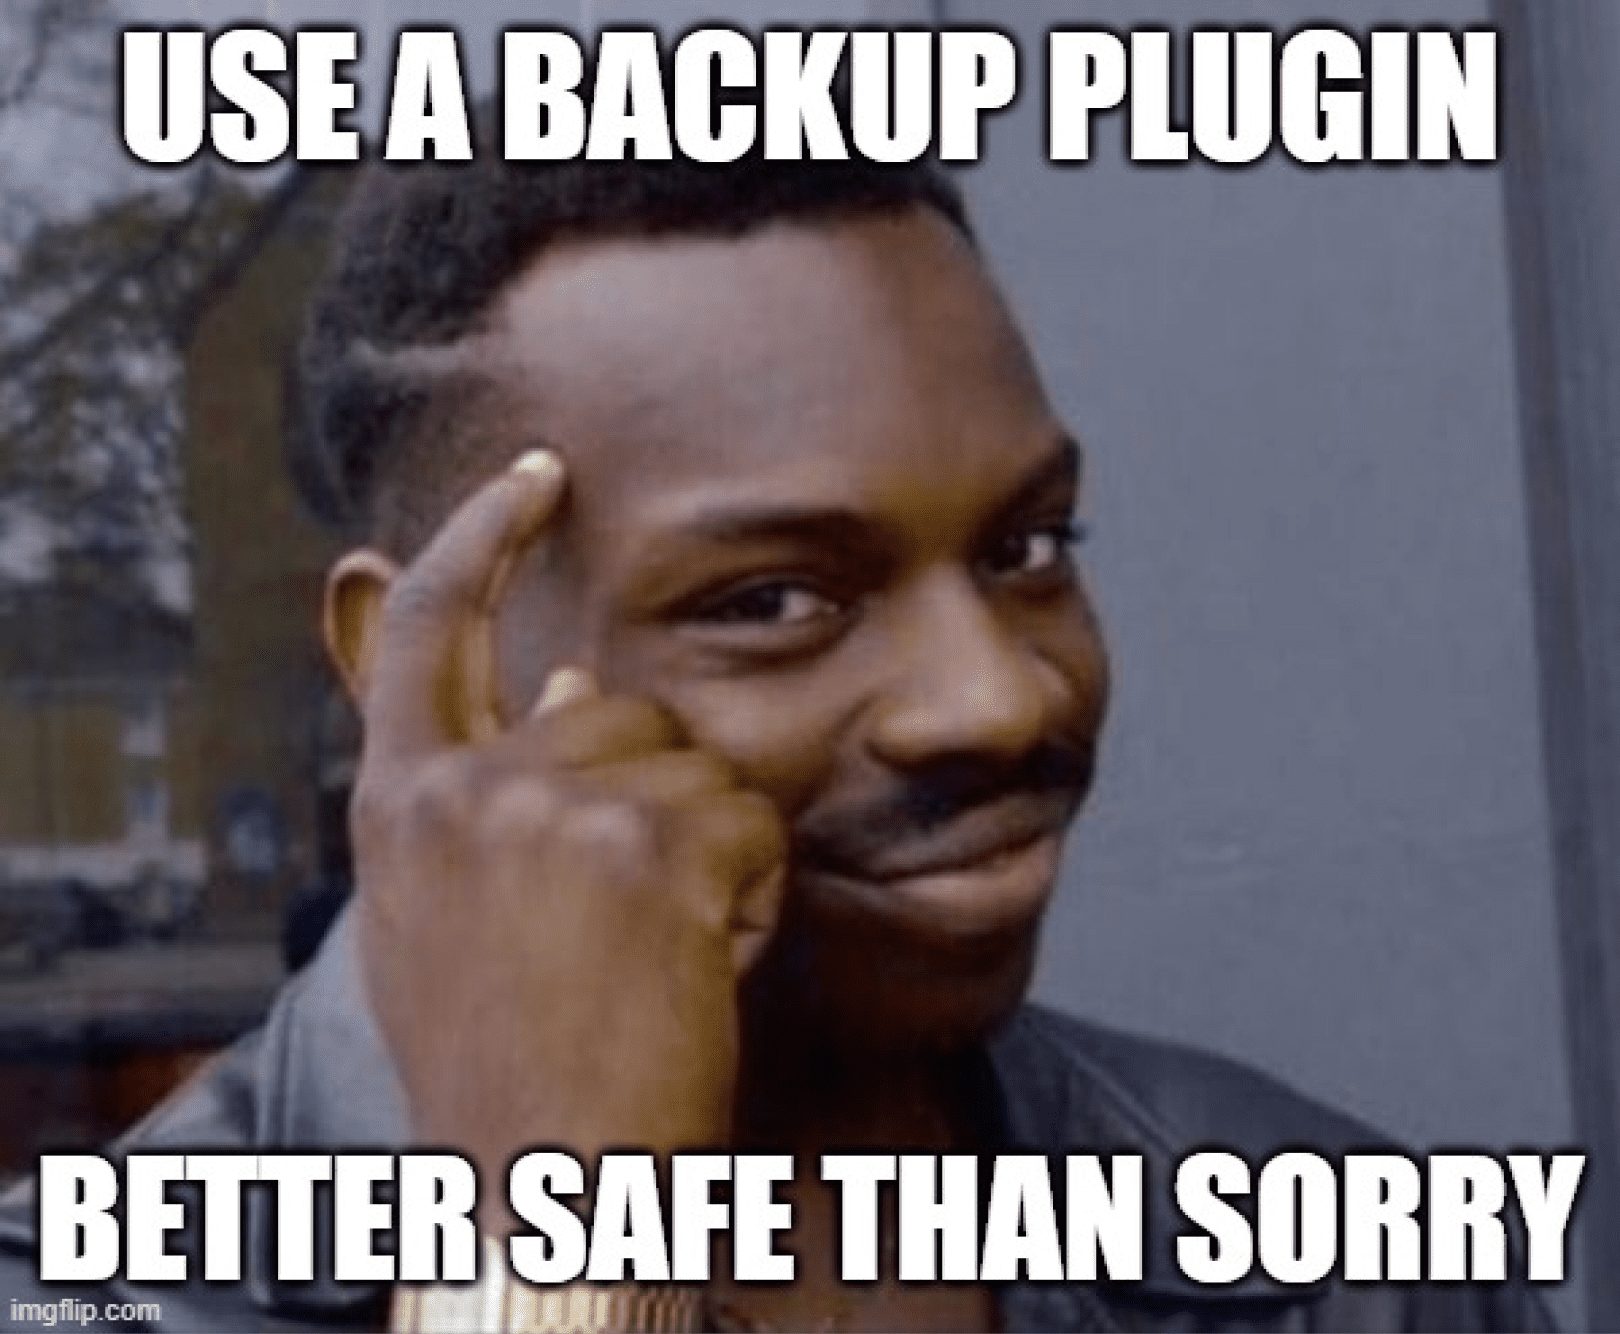 Why Do I Need a Backup Plugin